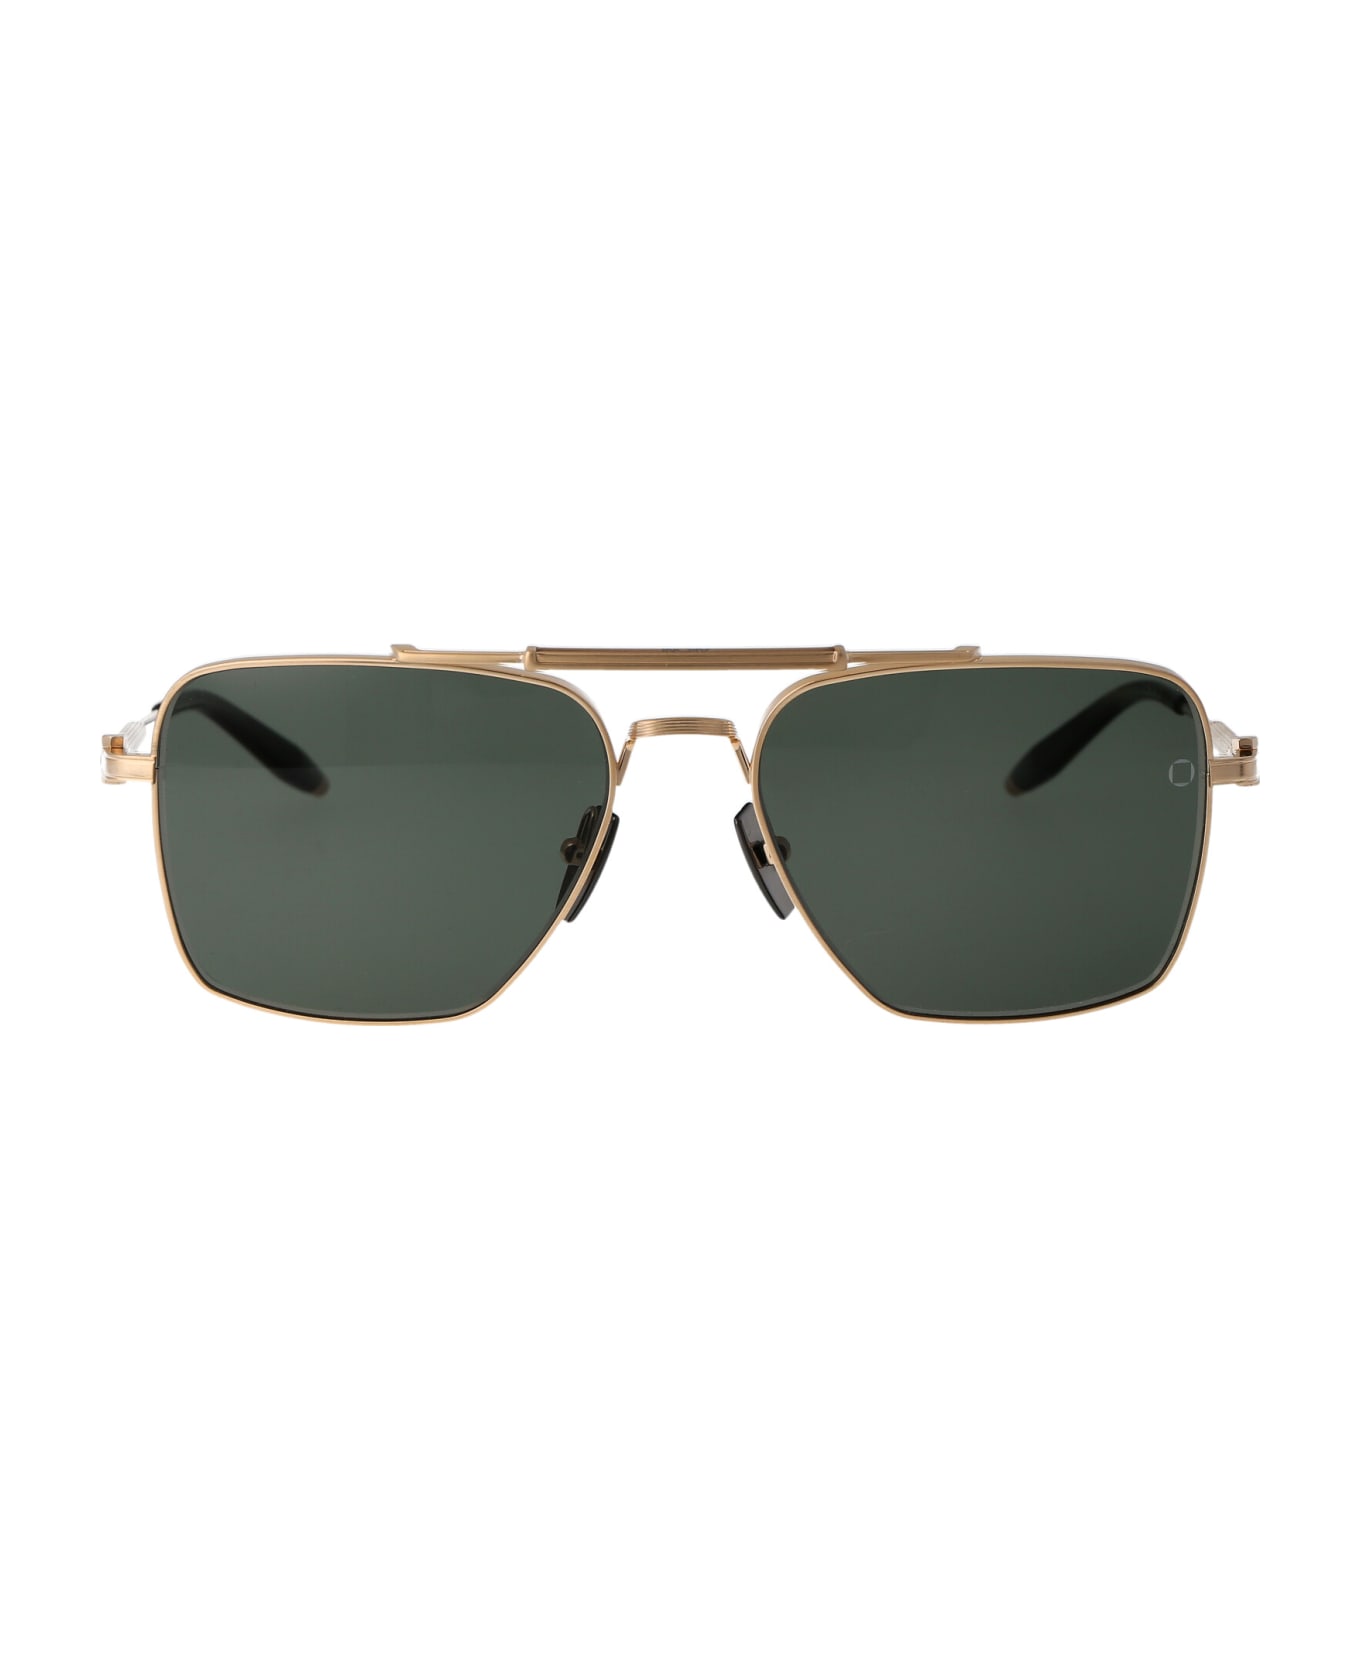 Akoni Eos Sunglasses - Eyewear DG2248 aviator-frame sunglasses